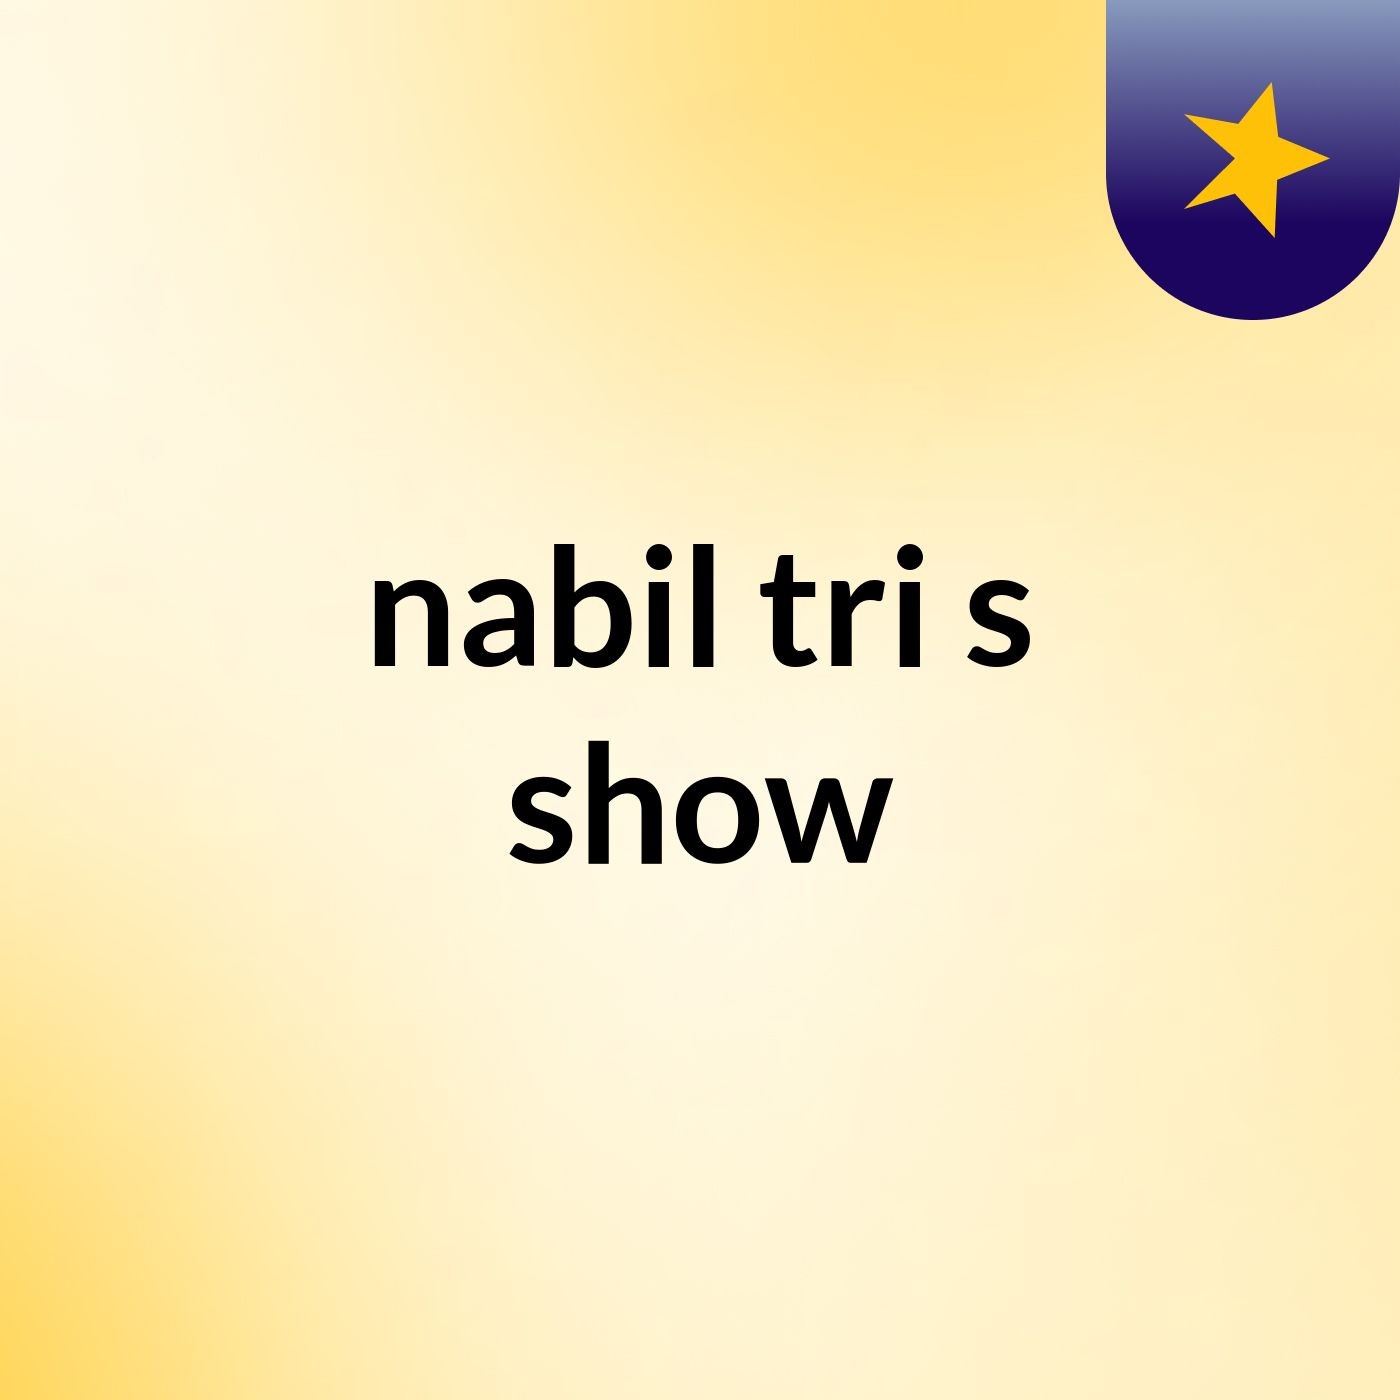 nabil tri's show